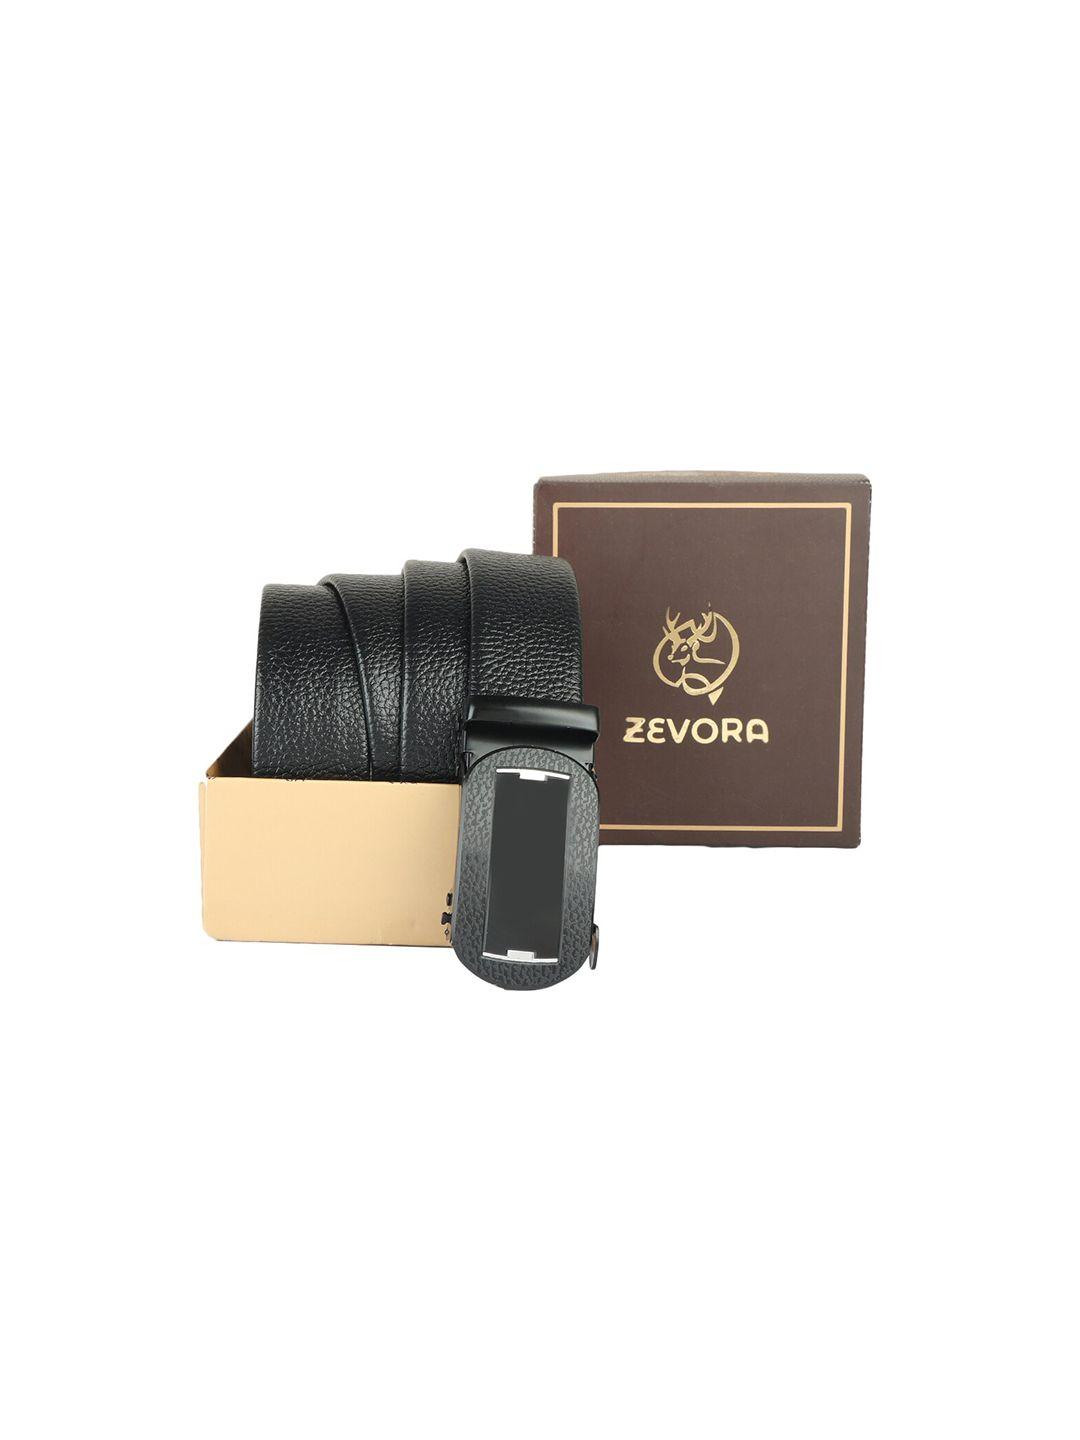 zevora men textured leather formal belt